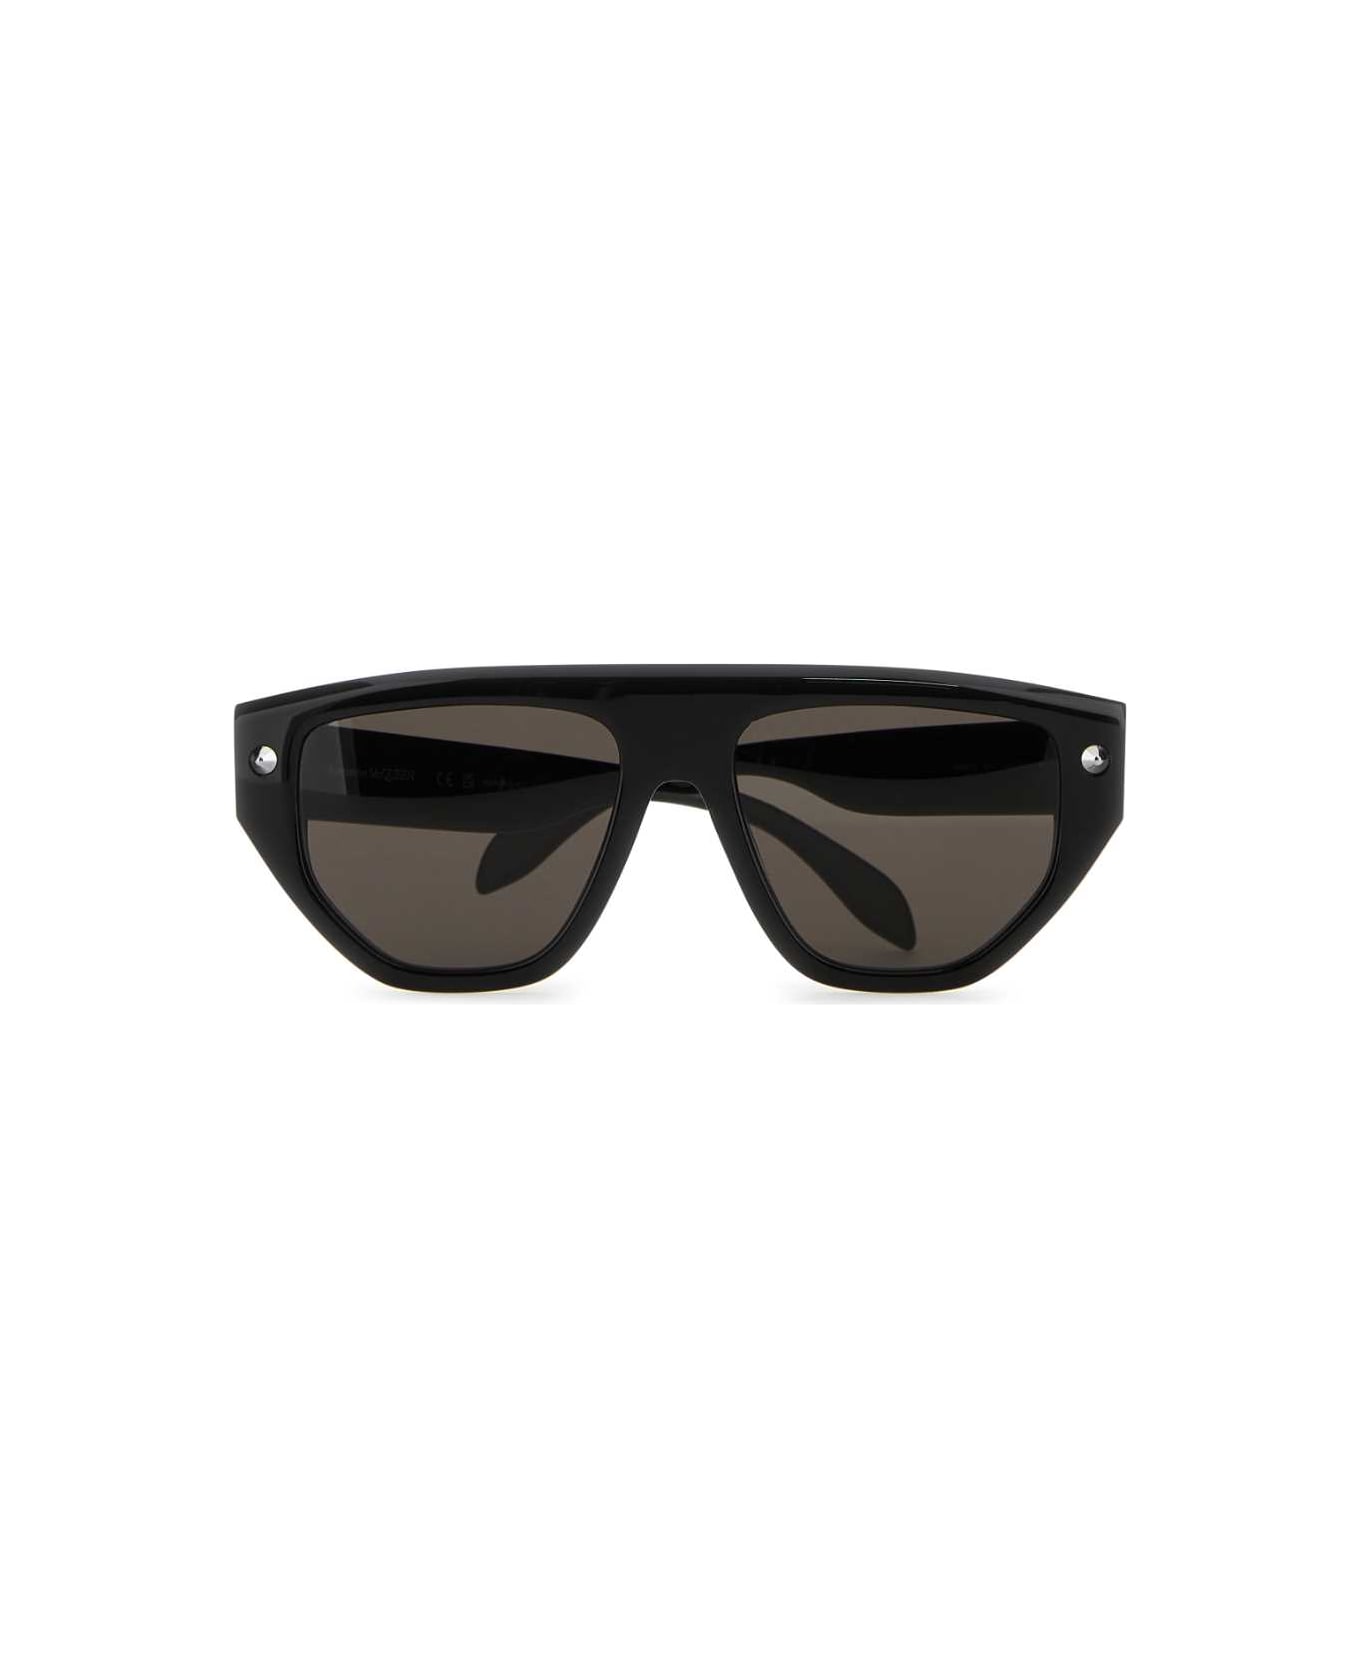 Alexander McQueen Black Acetate Sunglasses - BLACK-BLACK-SMOKE サングラス